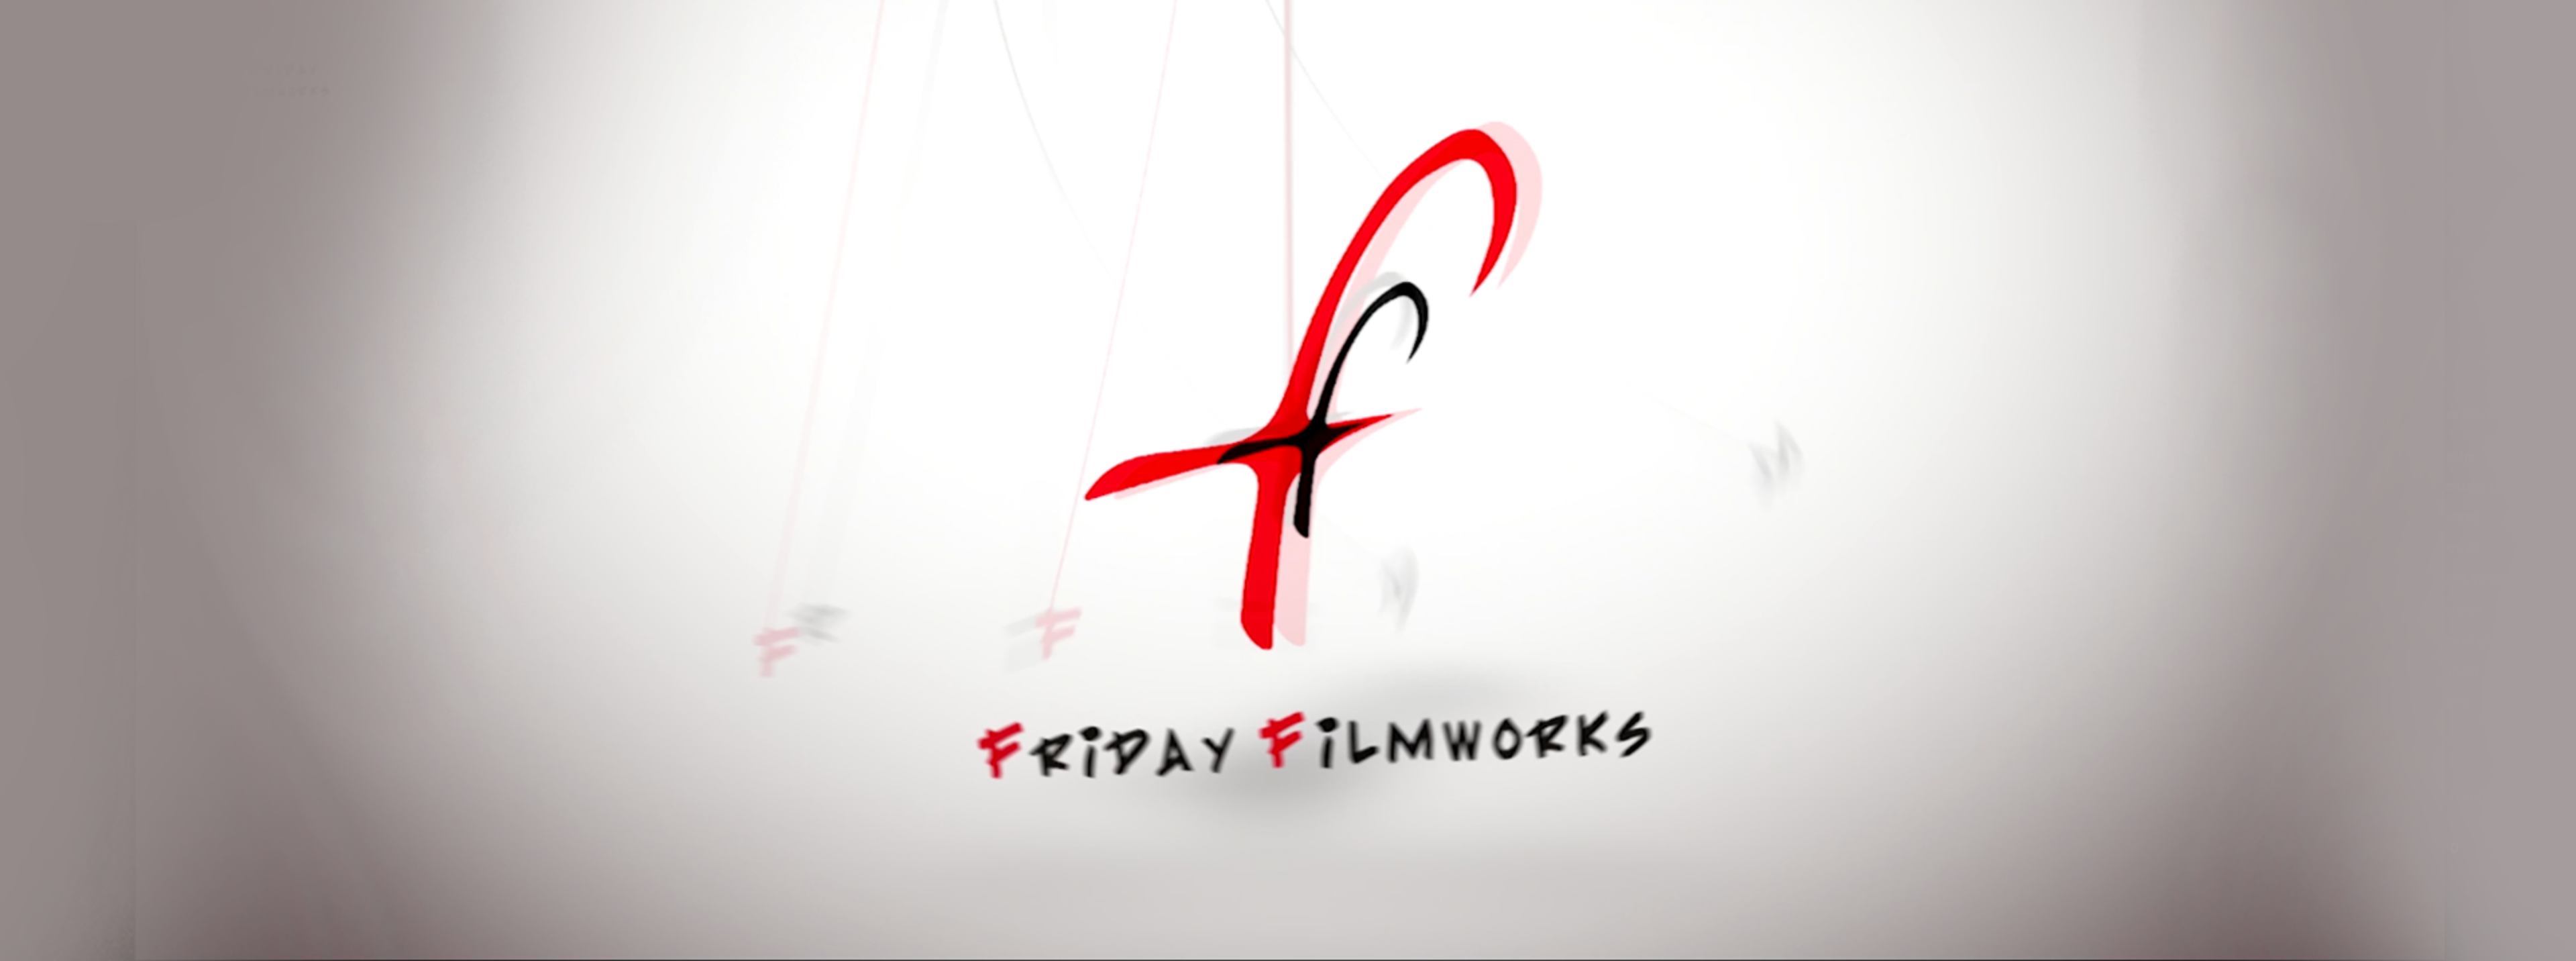 Friday Filmworks - Film Production Company